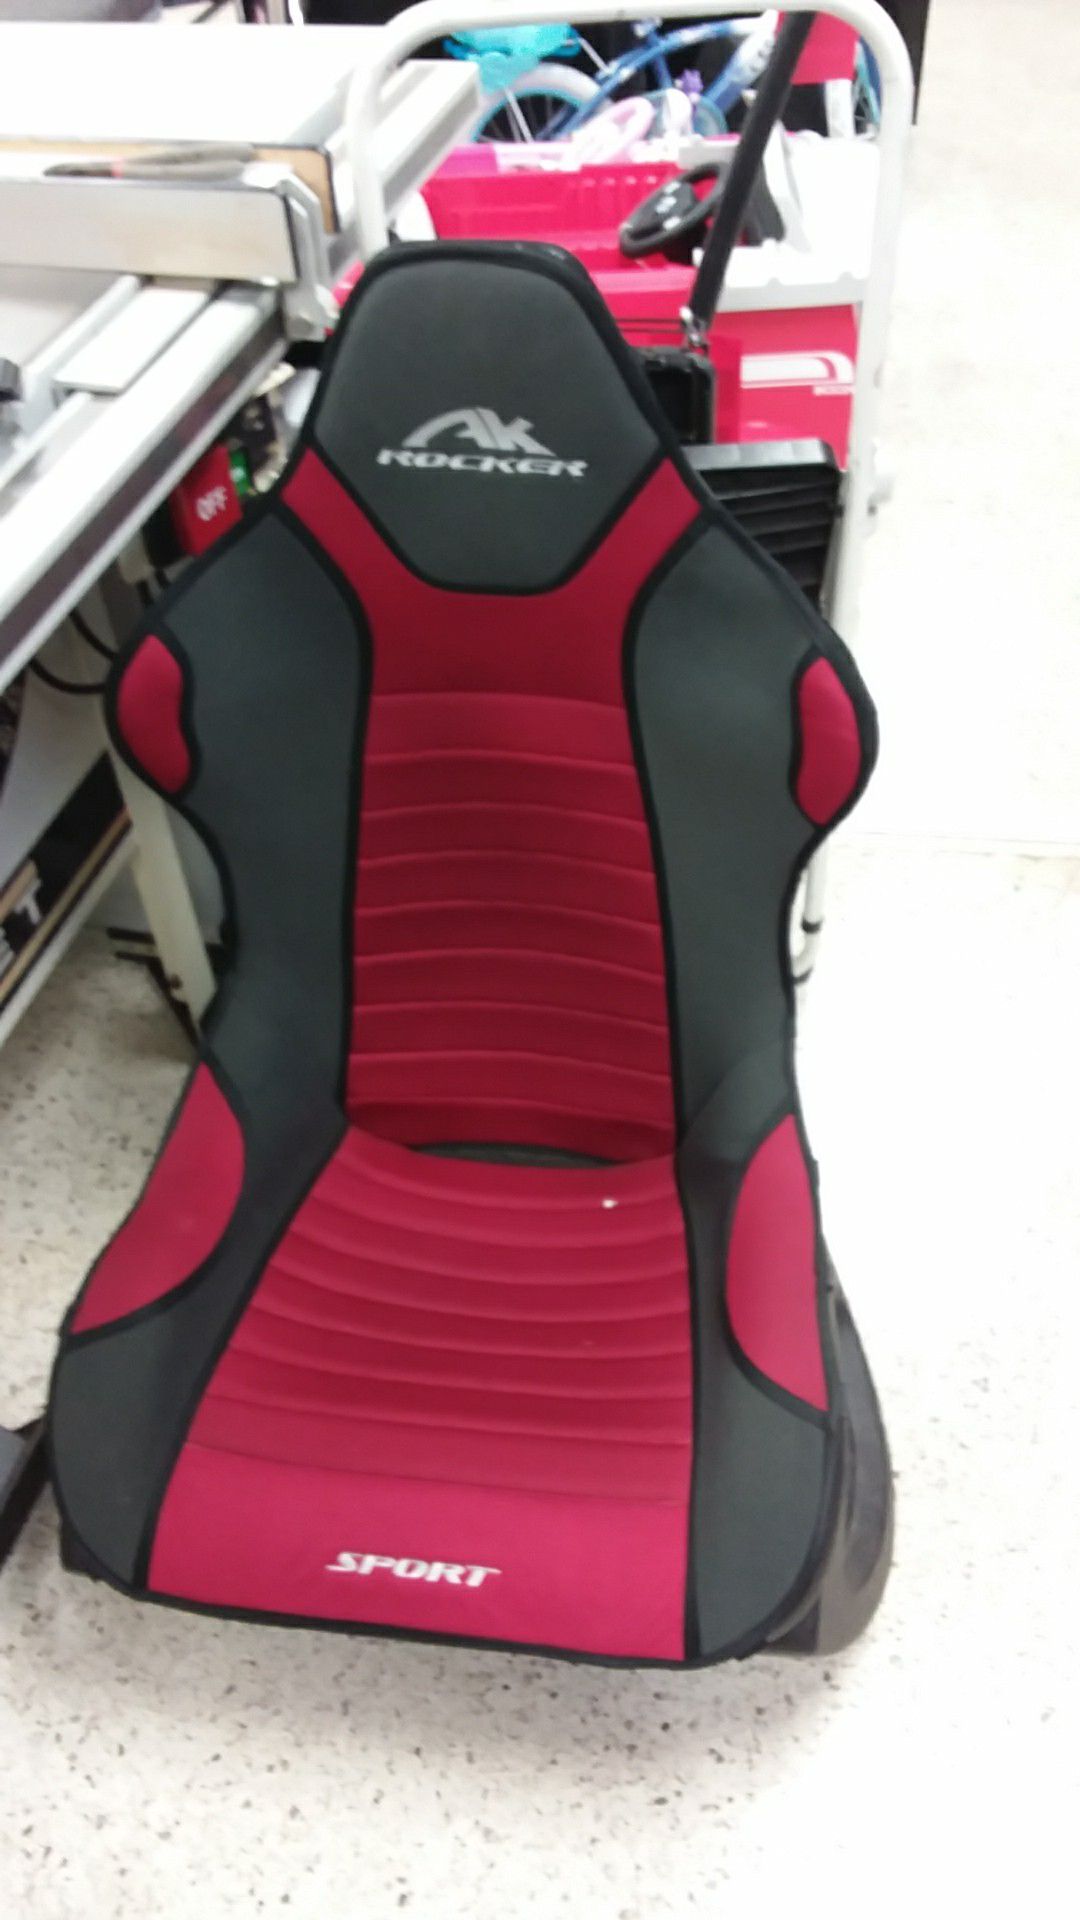 Rocket gaming chair